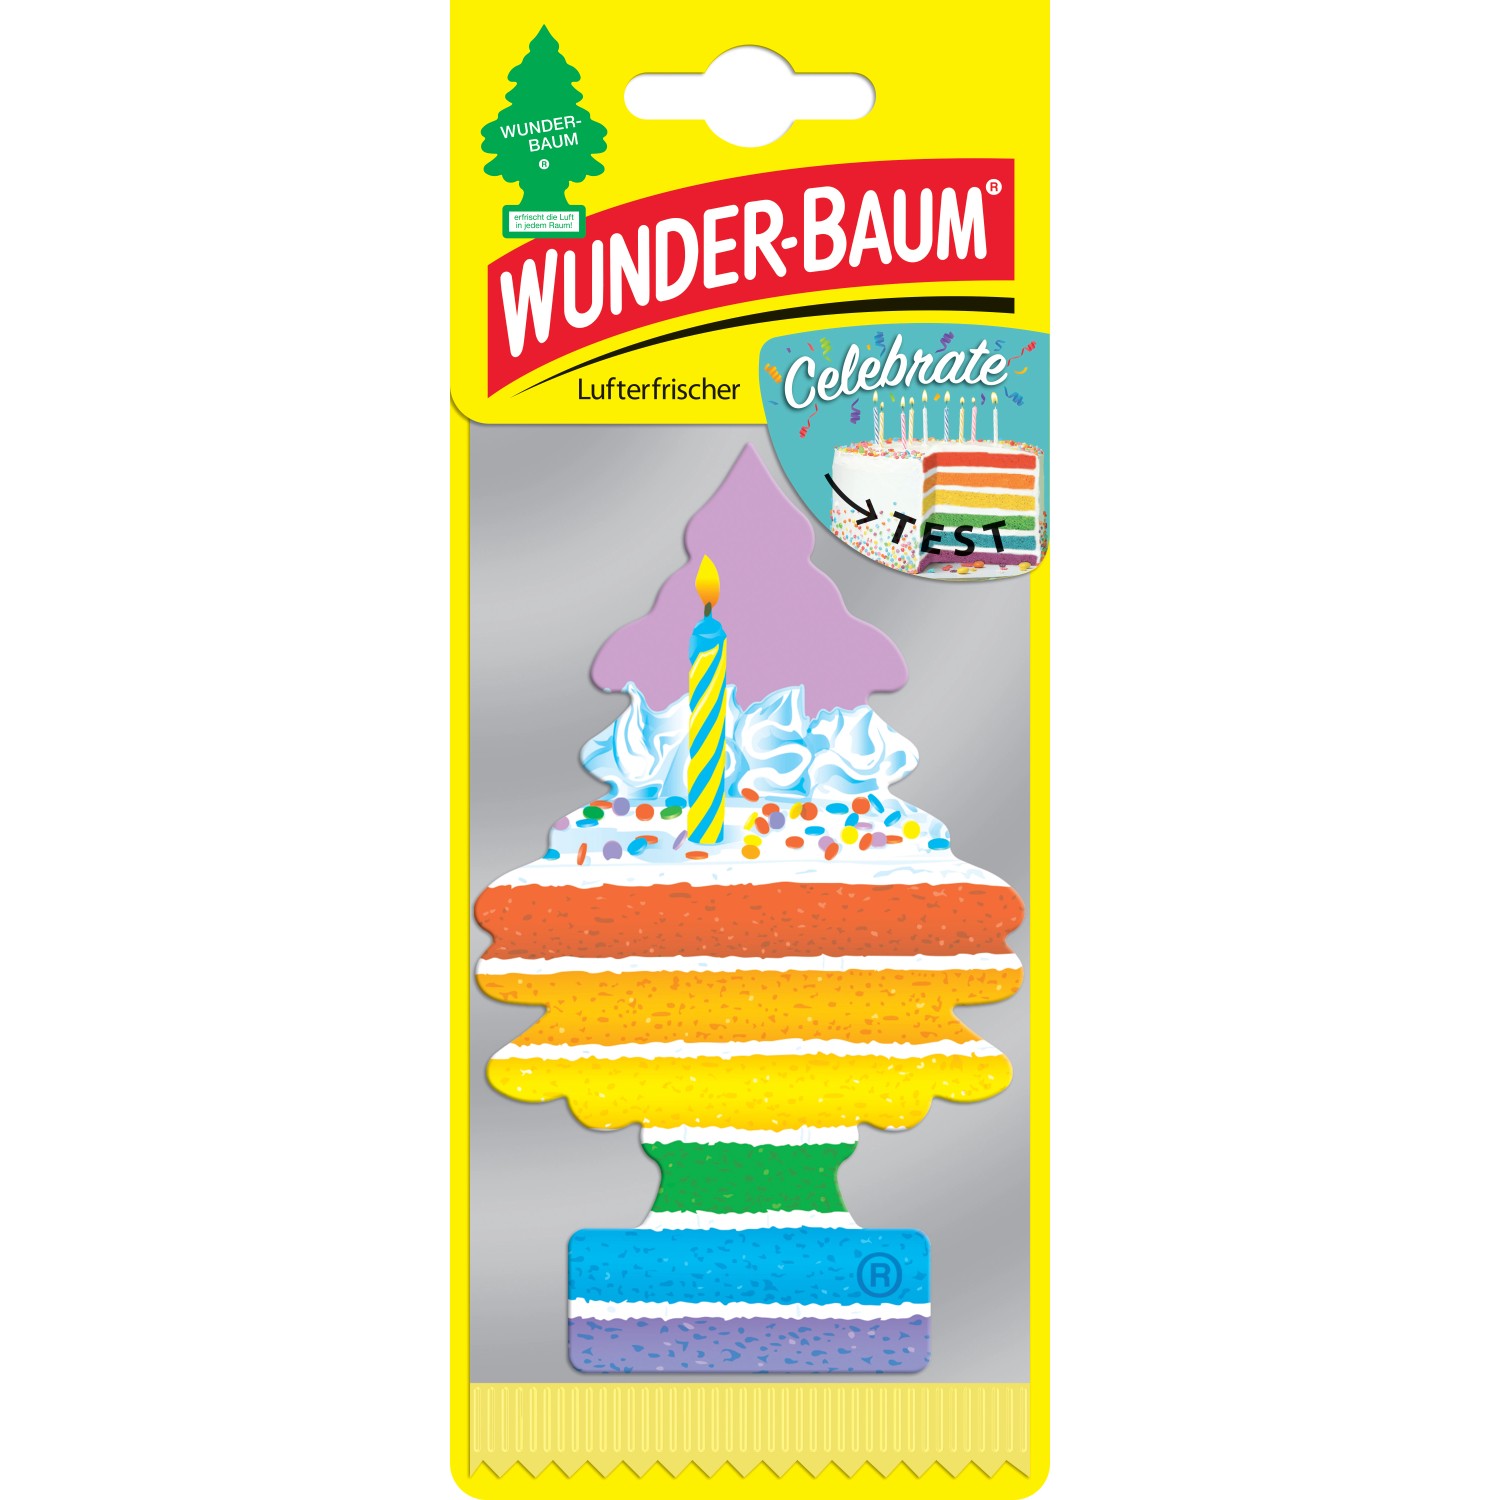 Wunderbaum Celebrate